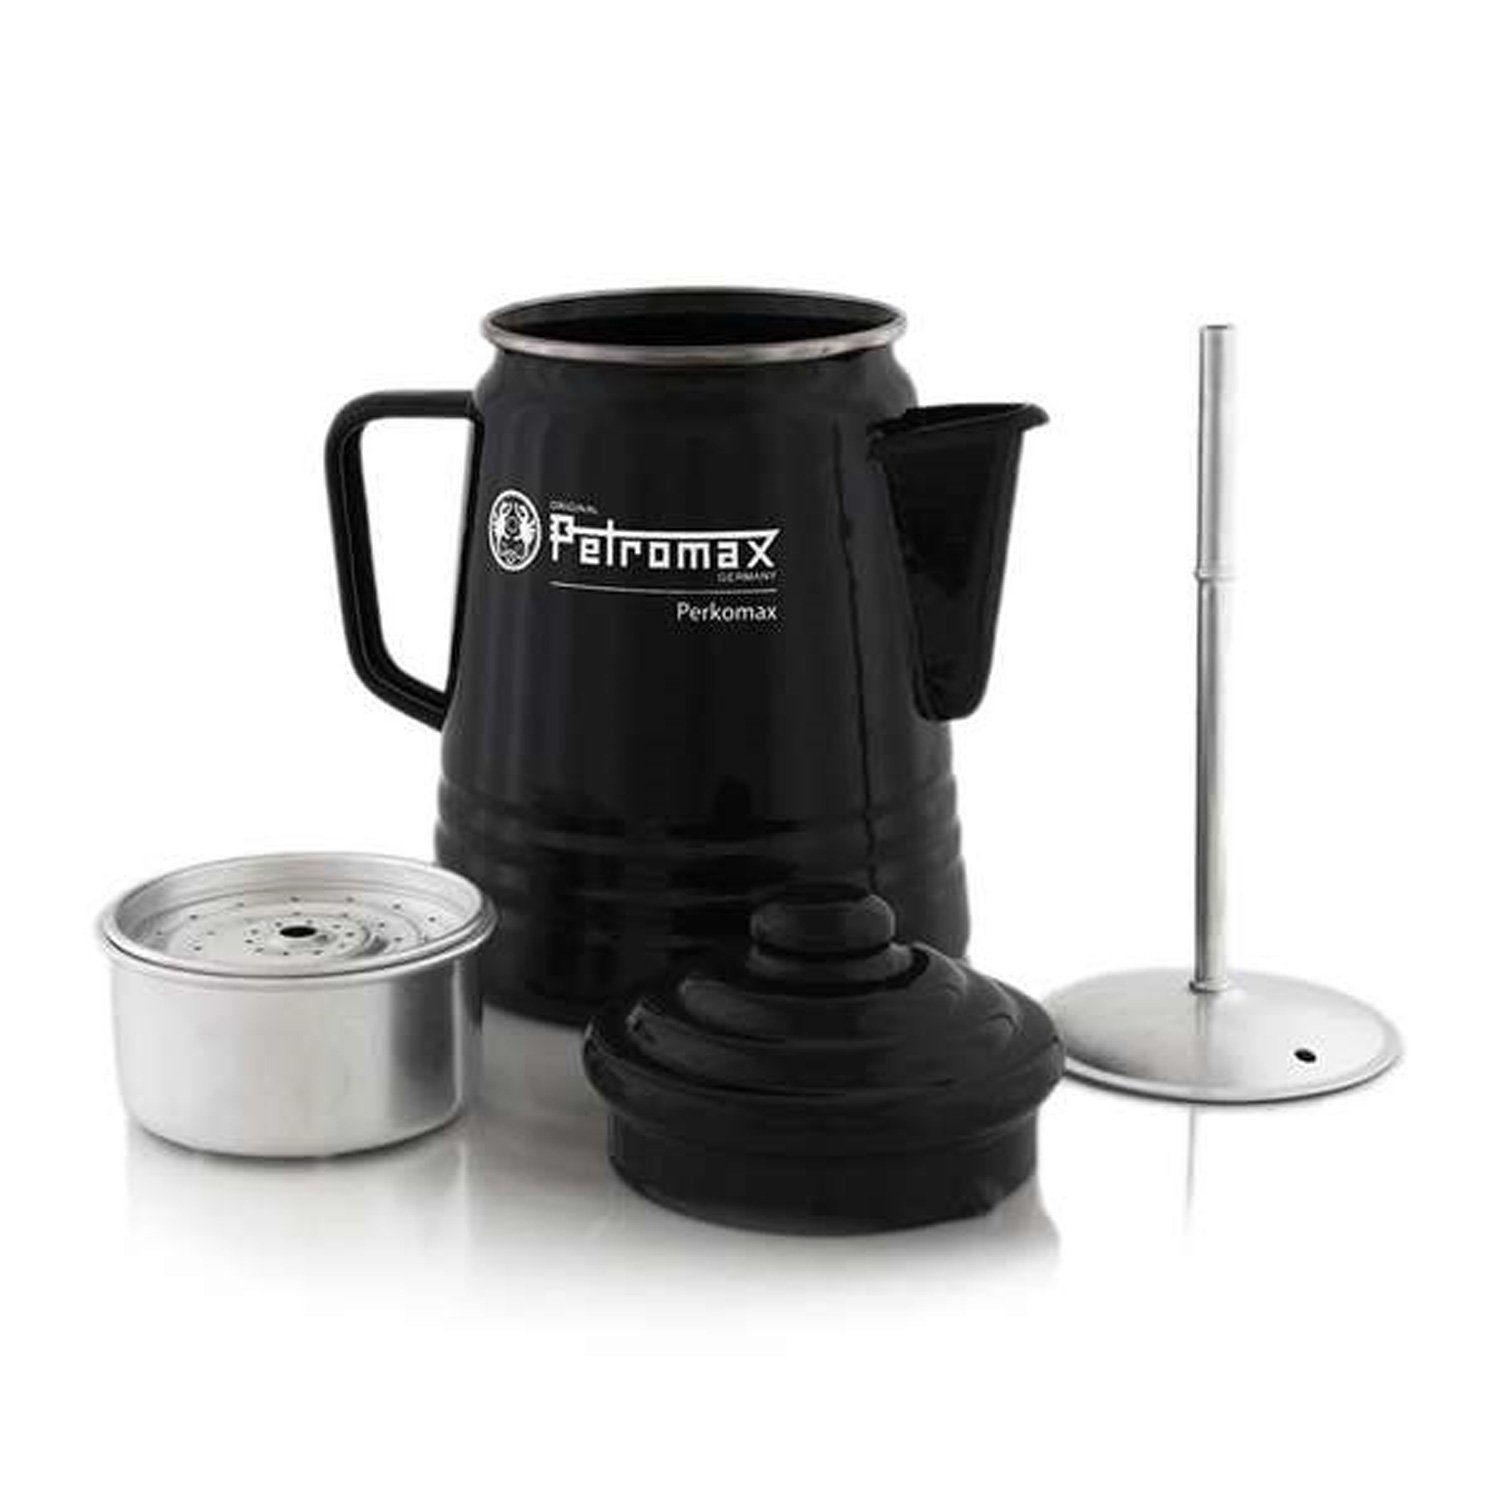 Perkolator Perkolator Kocher schwarz, Kaffee Petromax Petromax Tee per-9-s 1.3l Kaffeekanne 1,3l Kanne